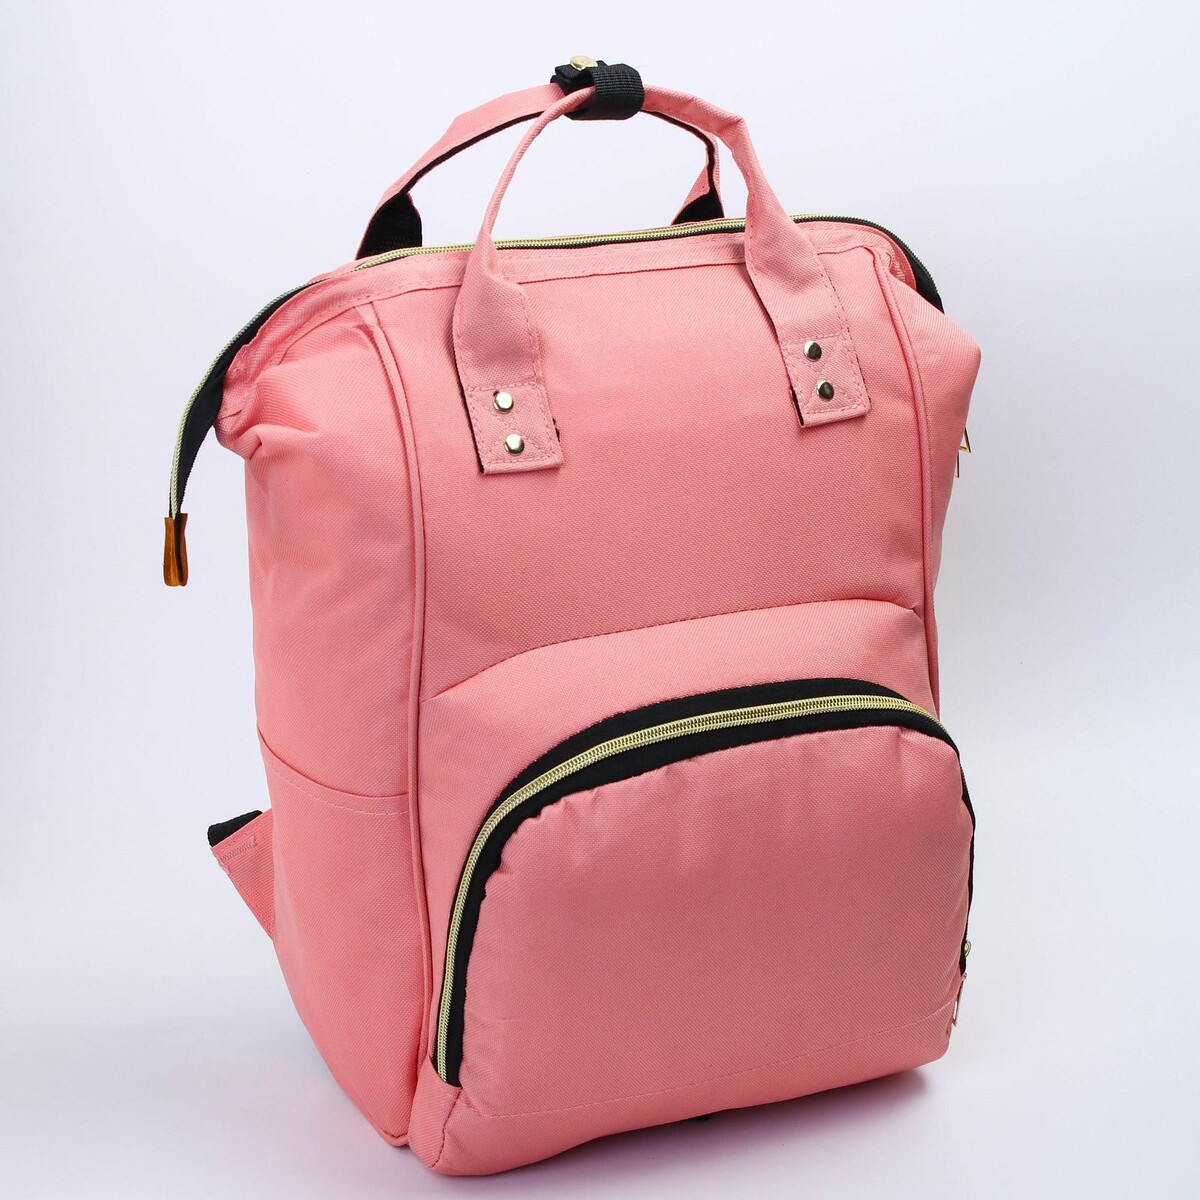 Рюкзак женский с термокарманом, термосумка - портфель, цвет розовый рюкзак женский с термокарманом термосумка портфель розовый